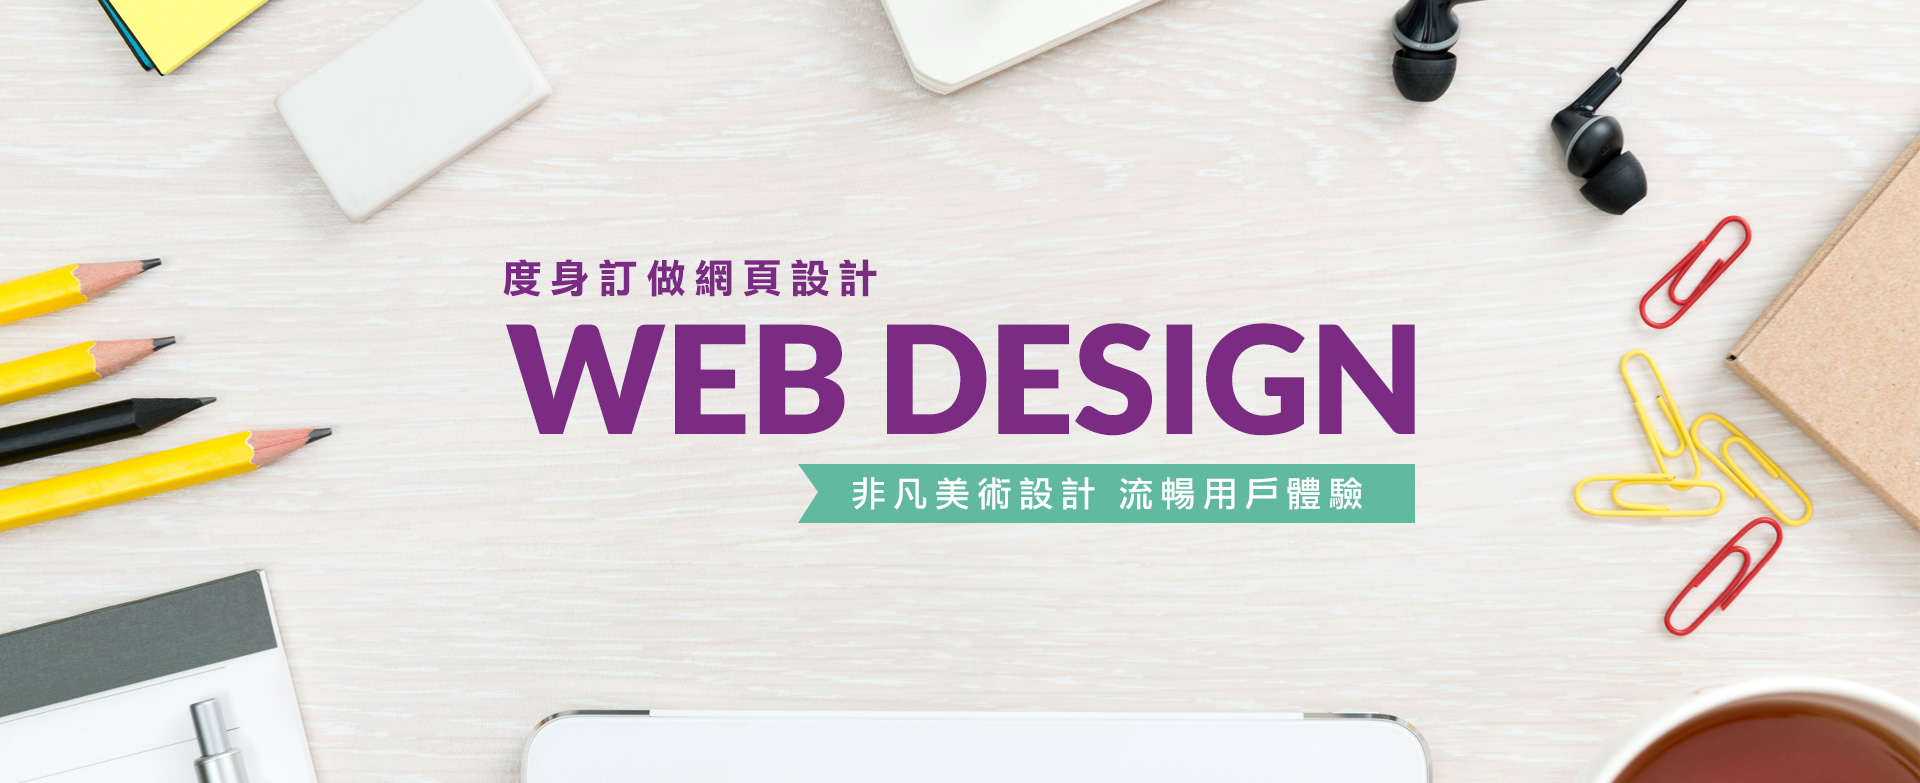 Professional website design service